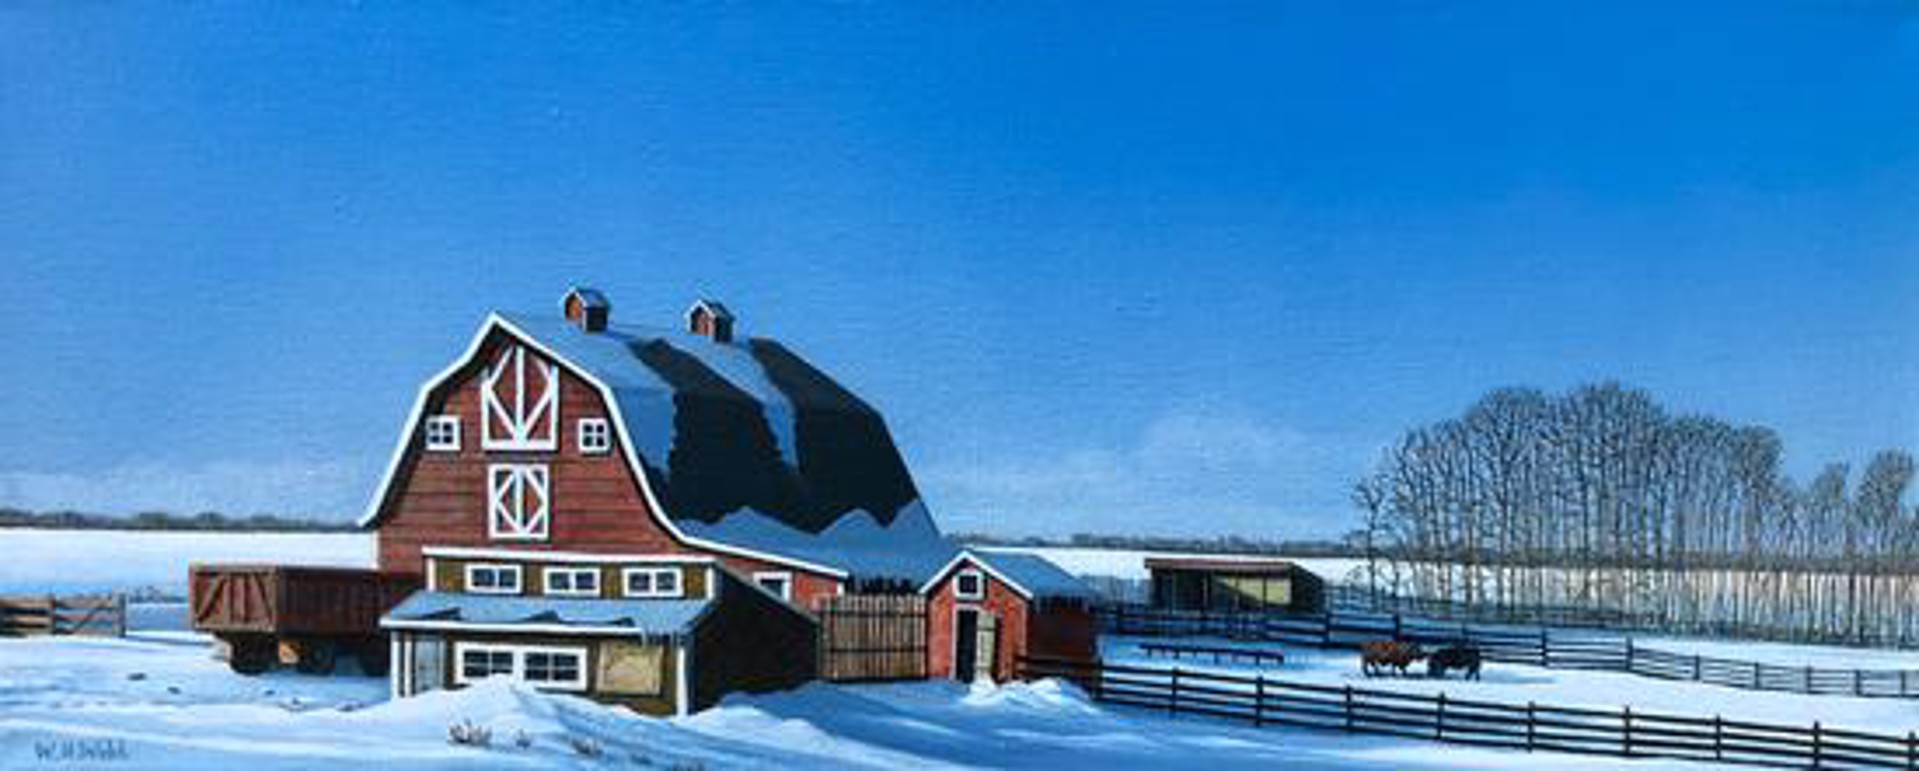 Red Barn by W.H. Webb (1940-2020)